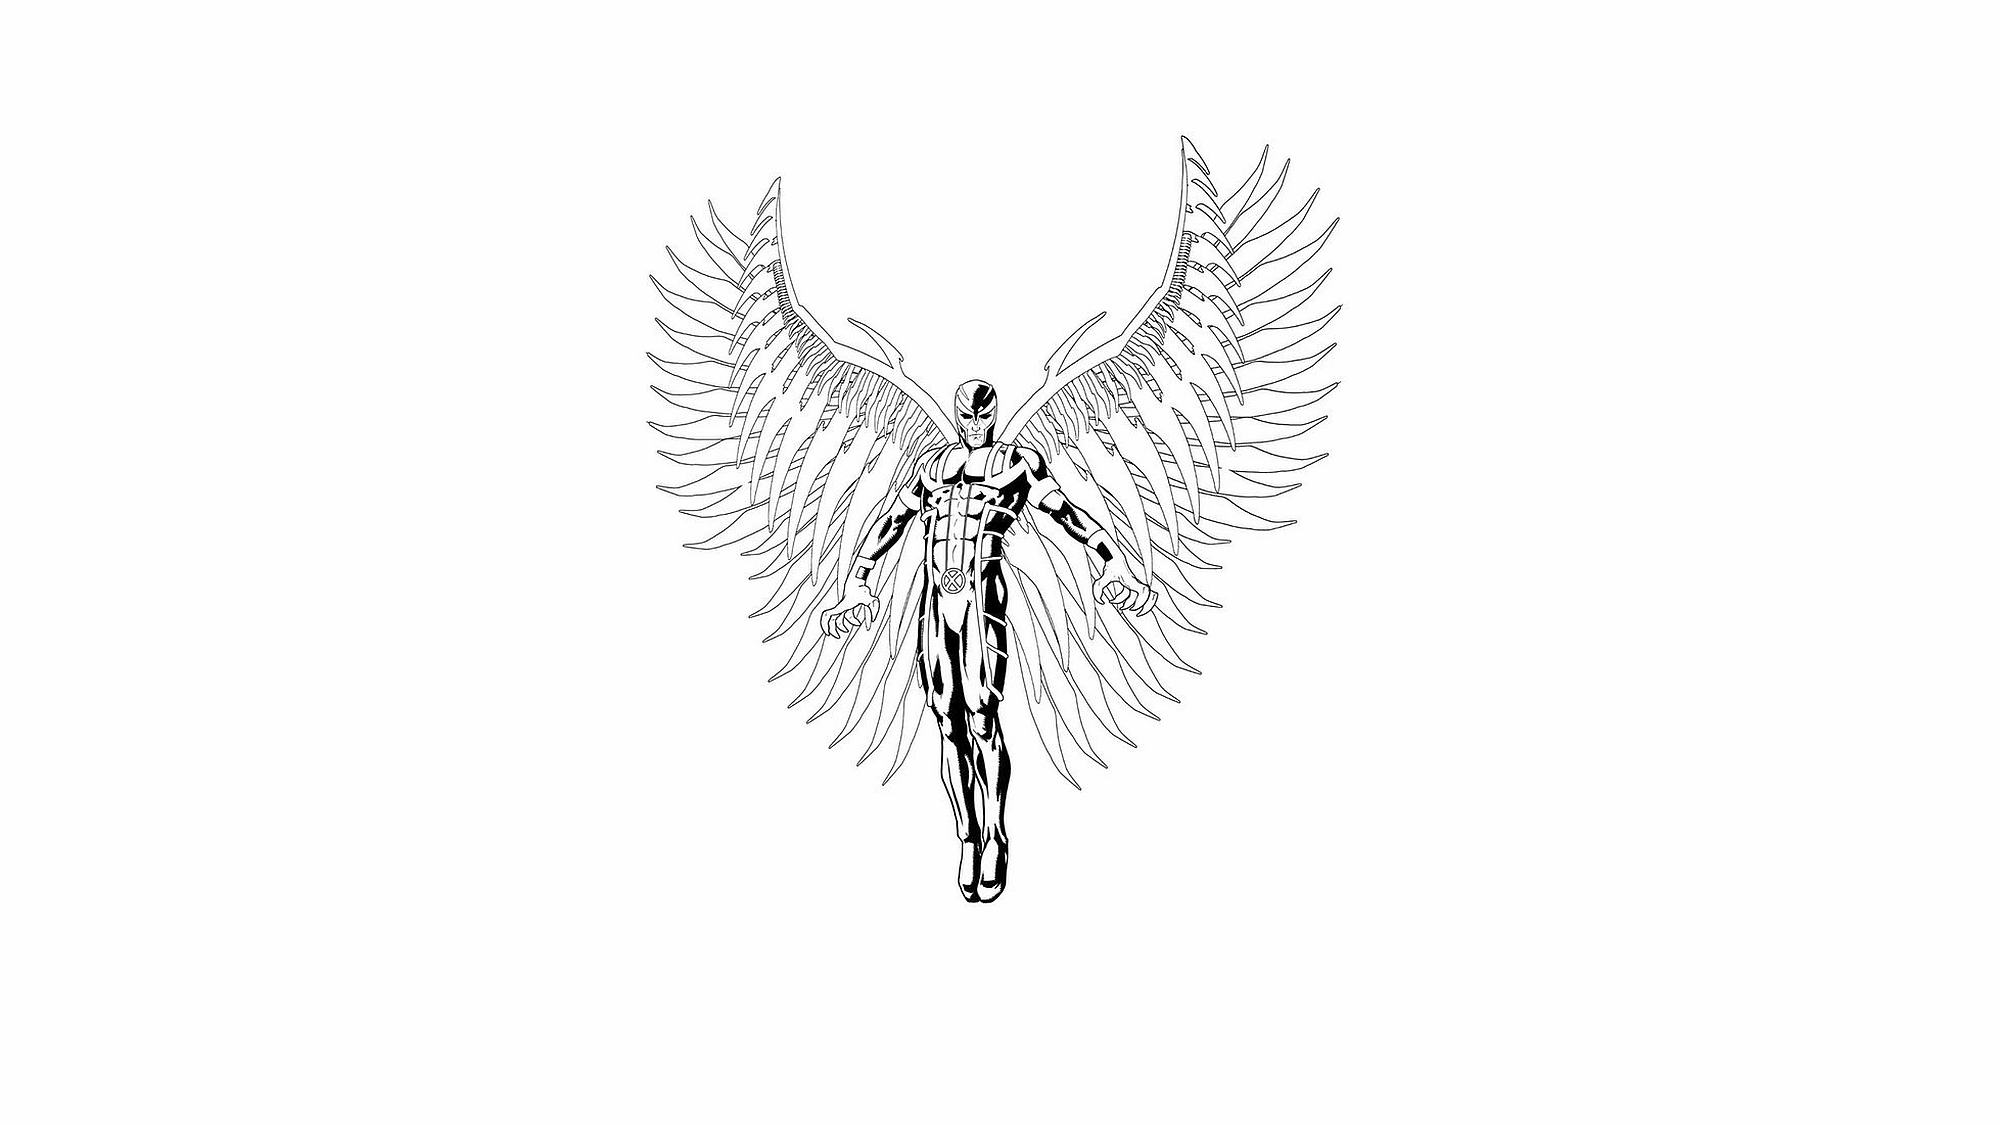 Archangel - All attribute wallpapers : r/summonerswar